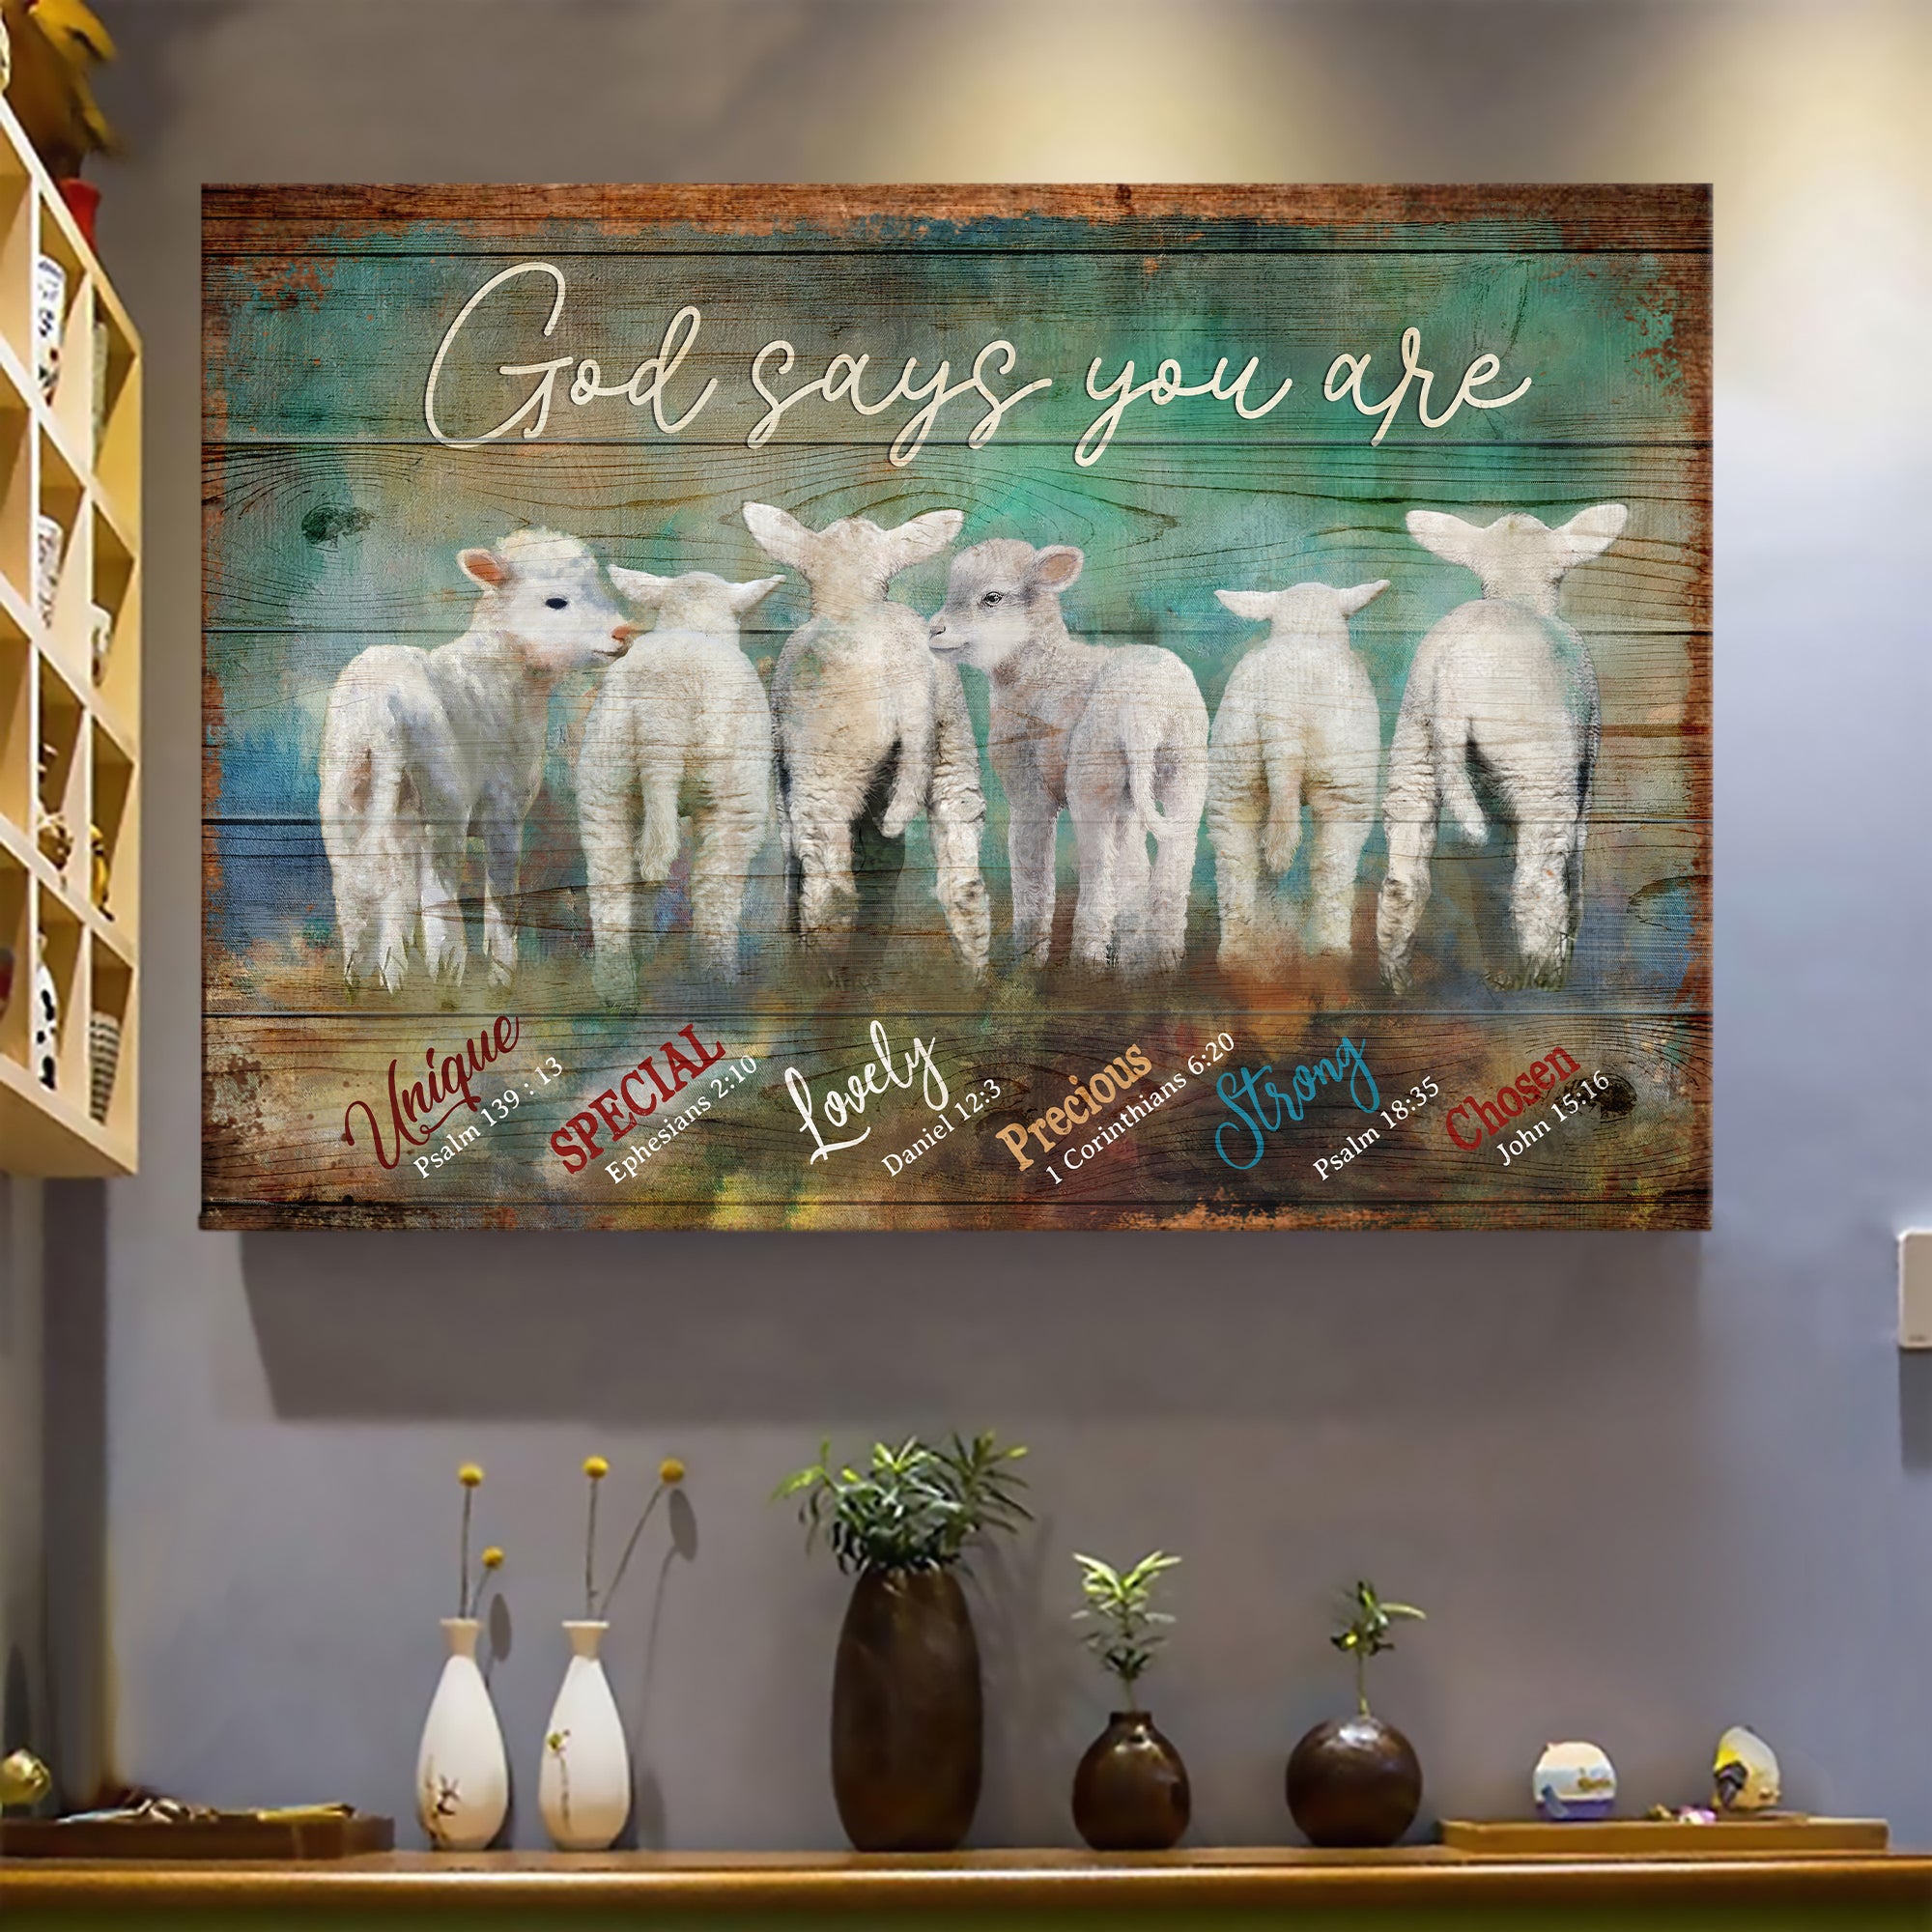 Adorable baby lambs, God says you are unique - Jesus Landscape Canvas Prints, Wall Art